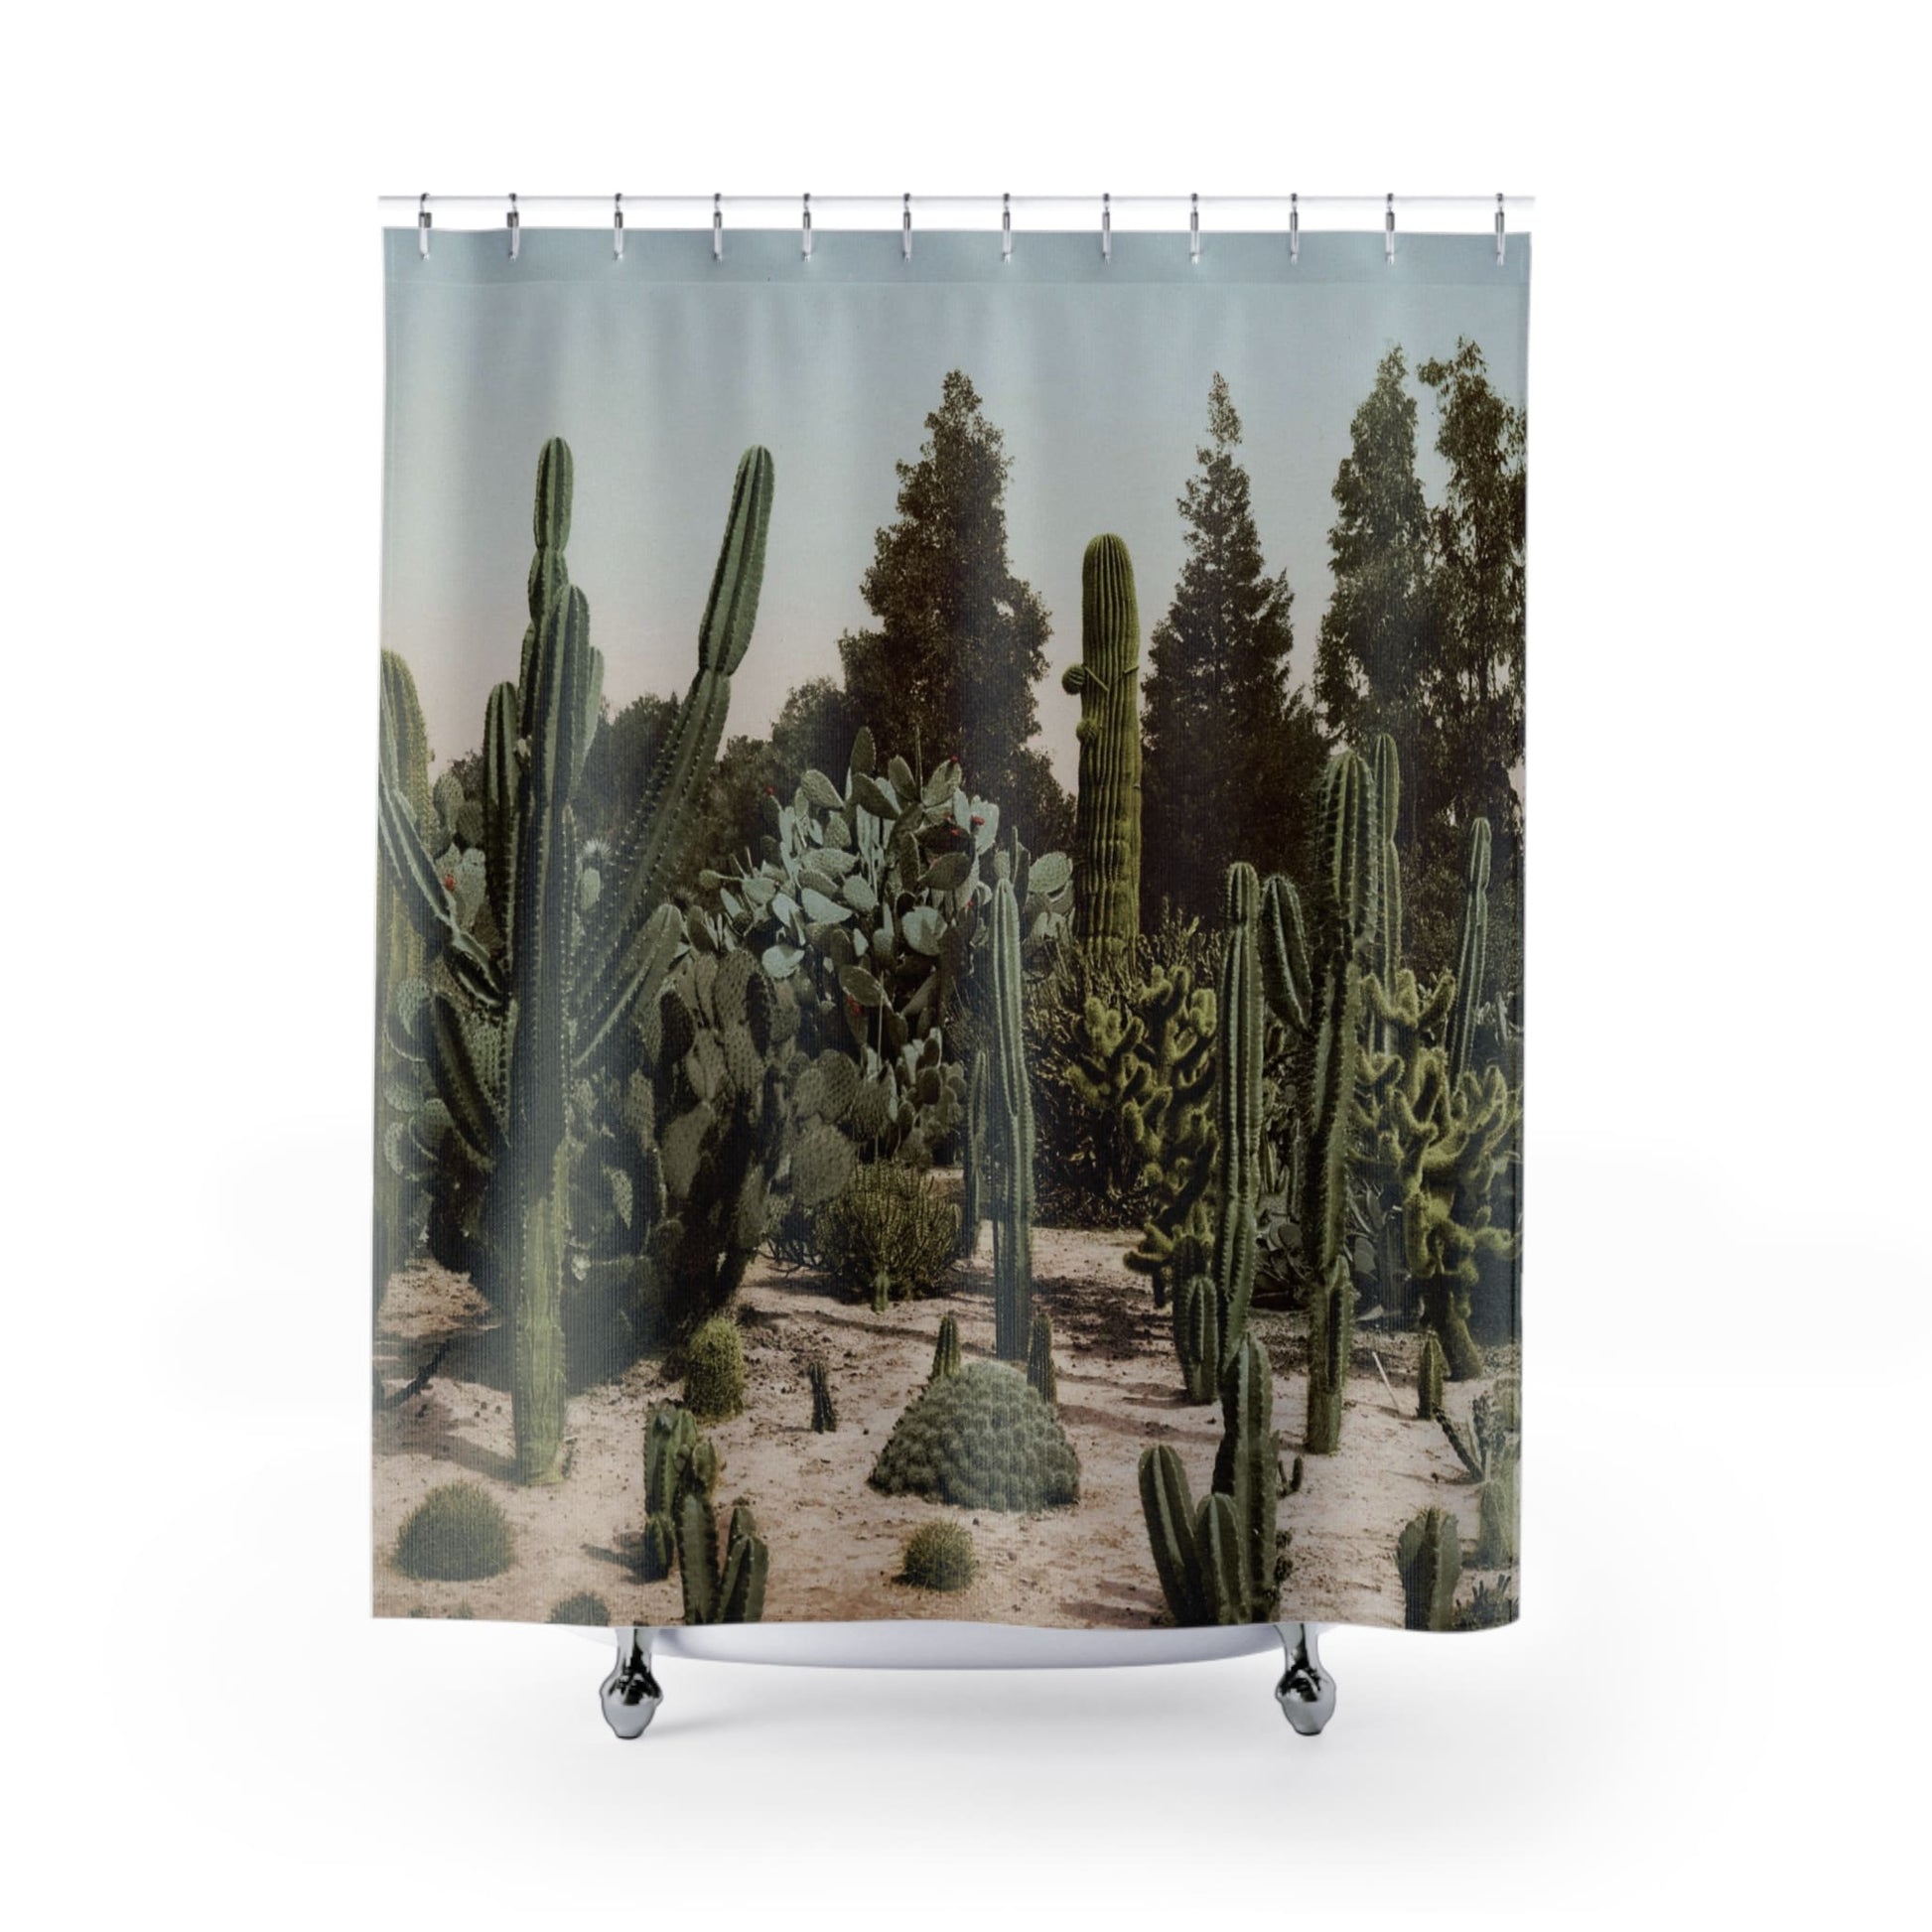 Desert Landscape Shower Curtain with boho chic design, stylish bathroom decor featuring serene desert scenes.